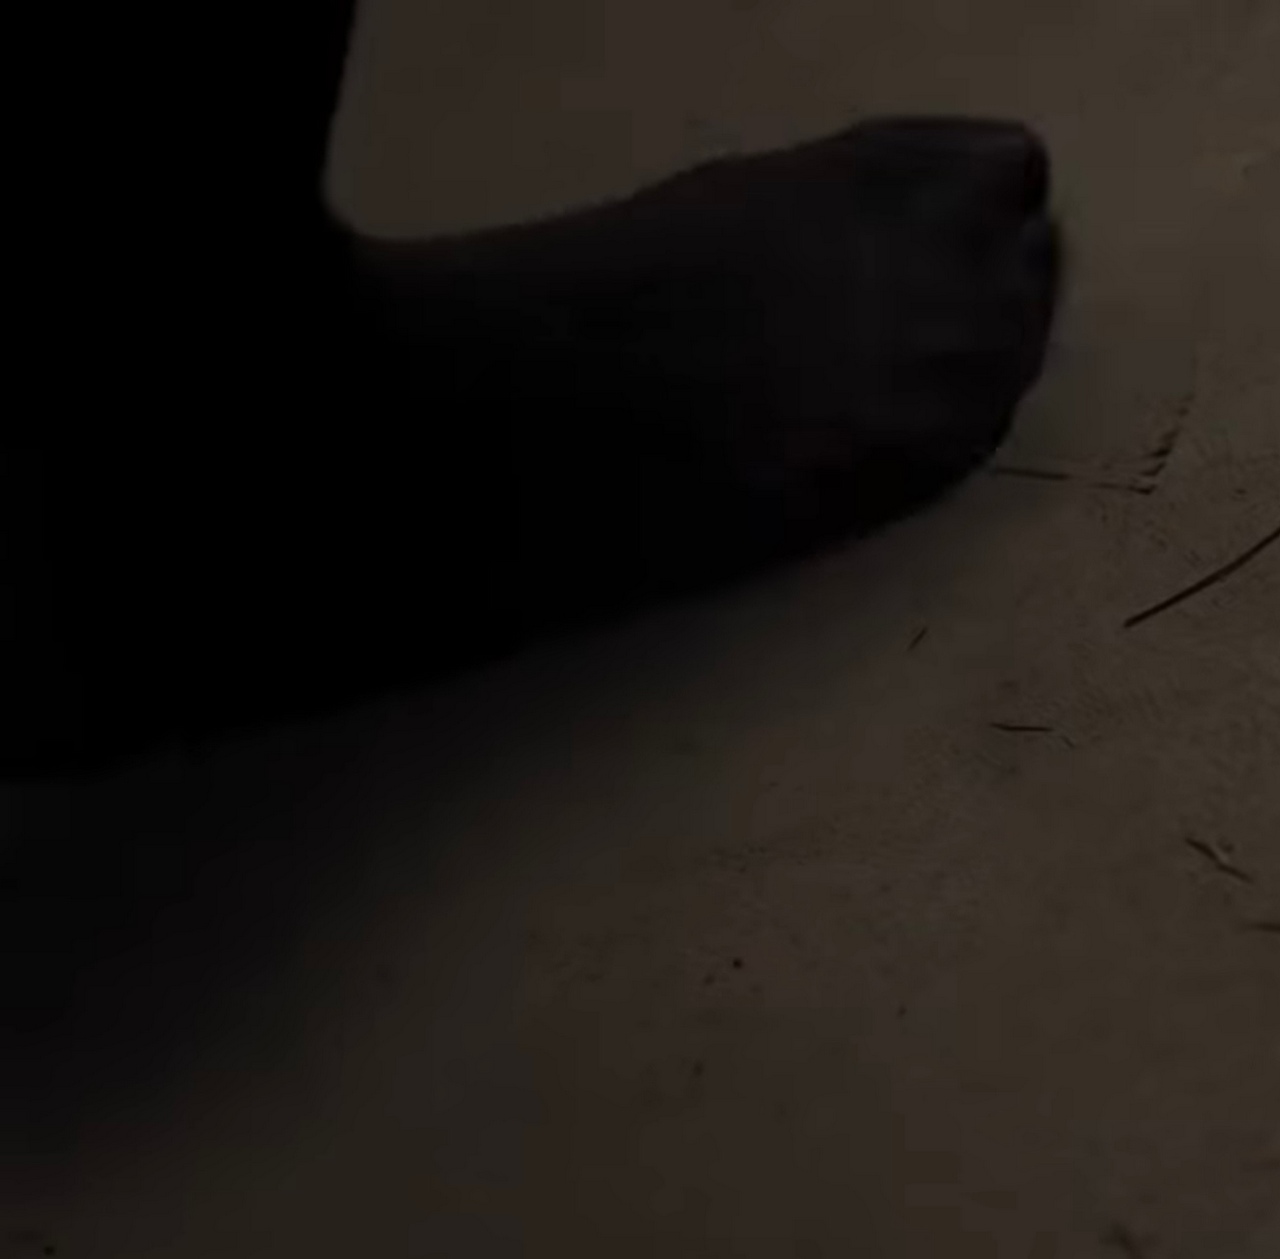 Scarlett Johansson Feet